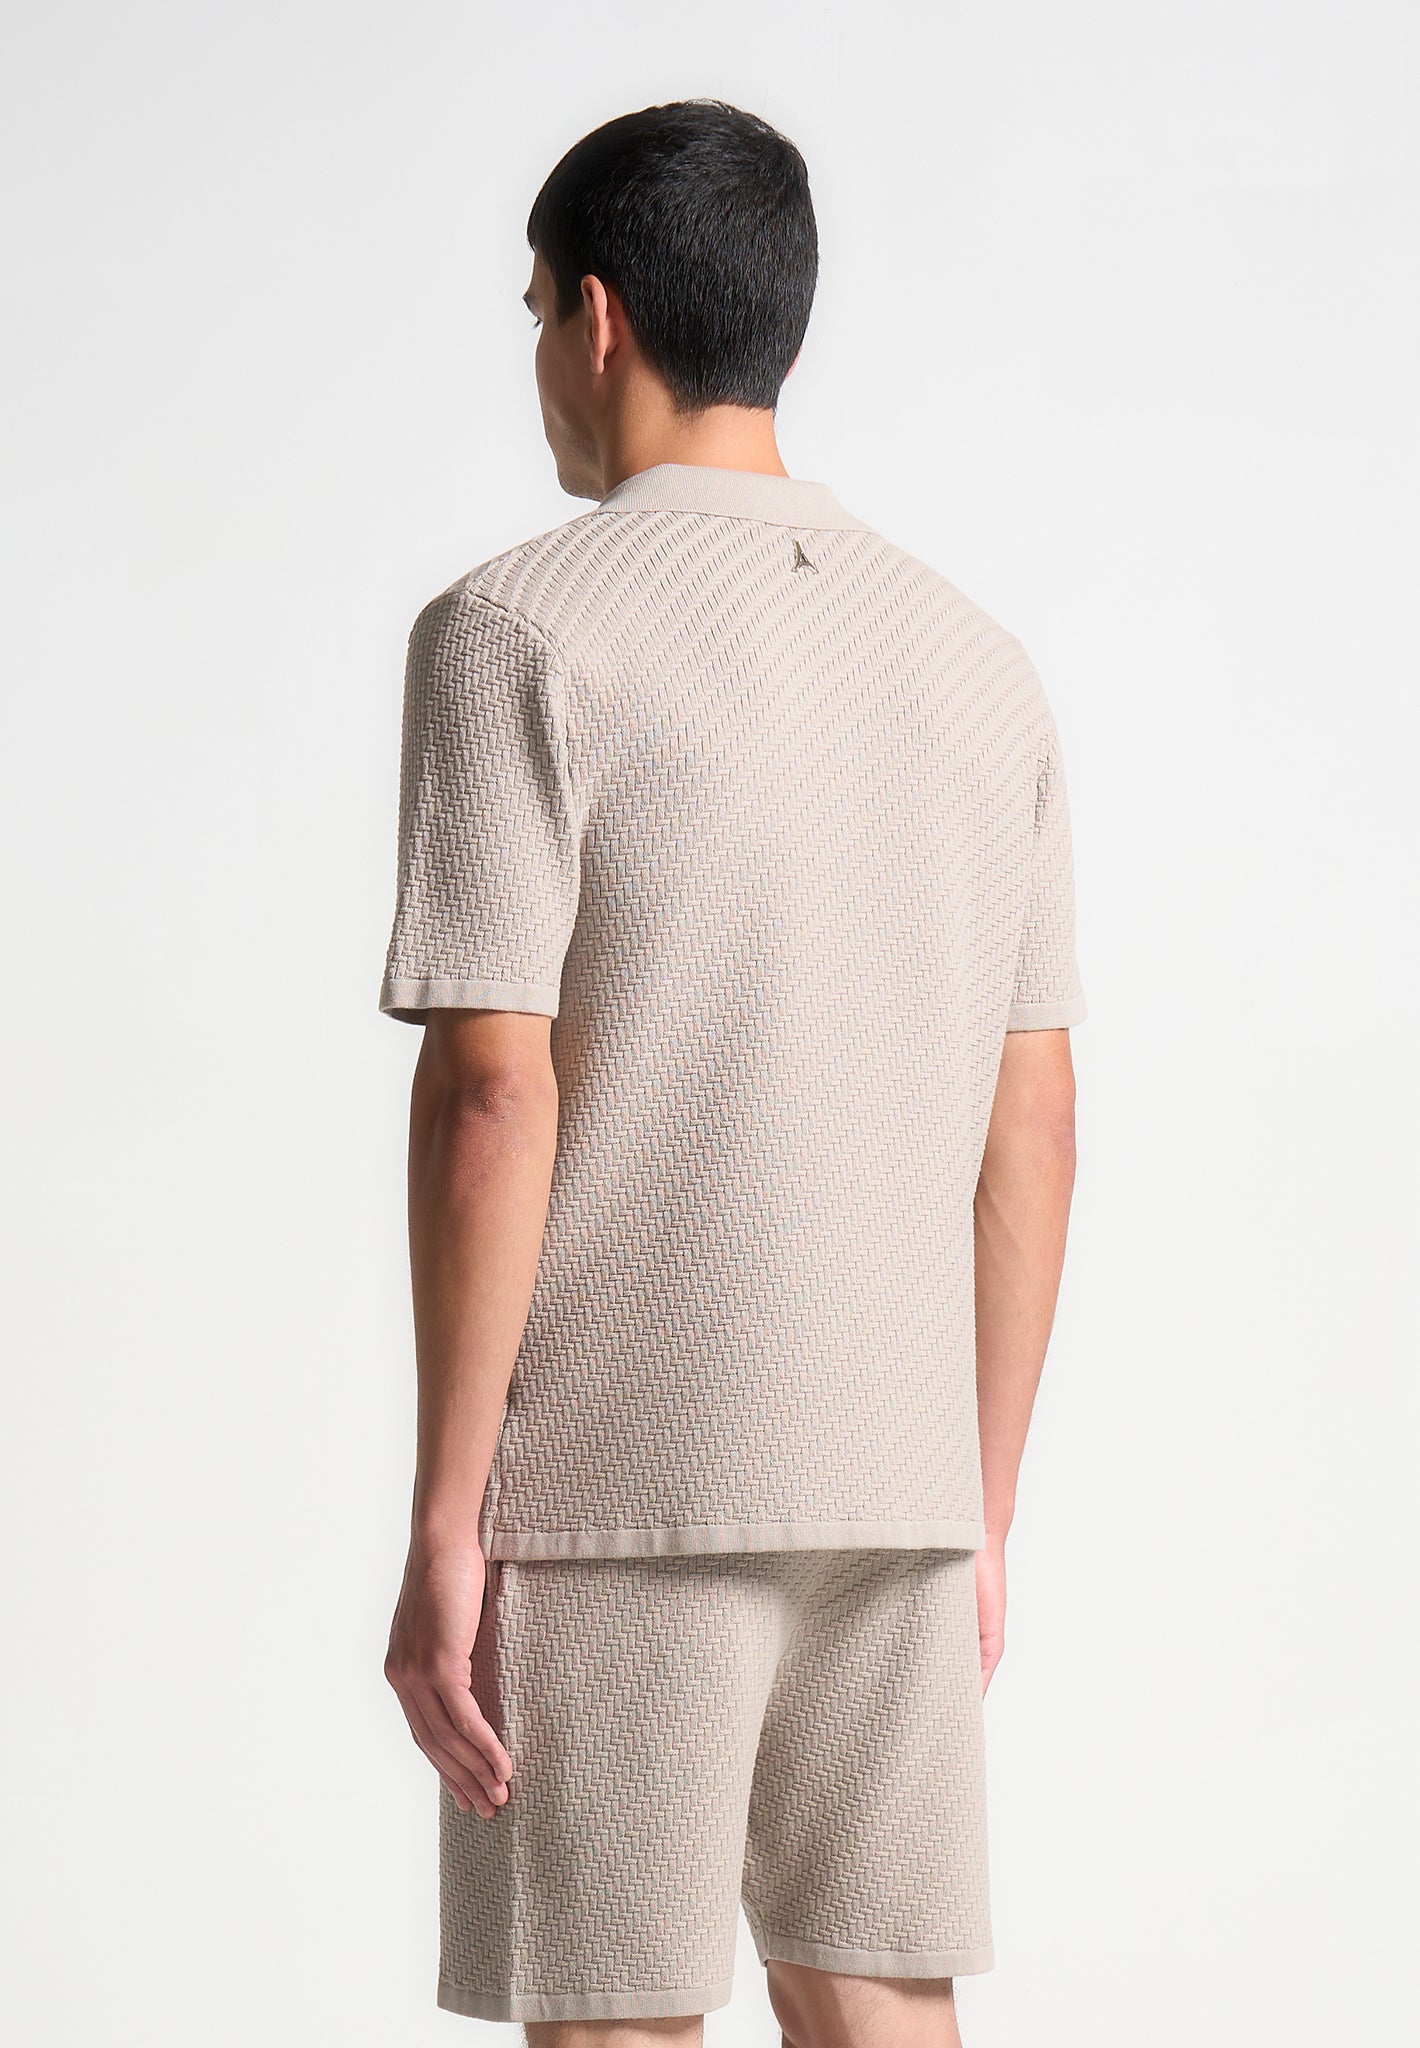 herringbone-knit-revere-shirt-taupe